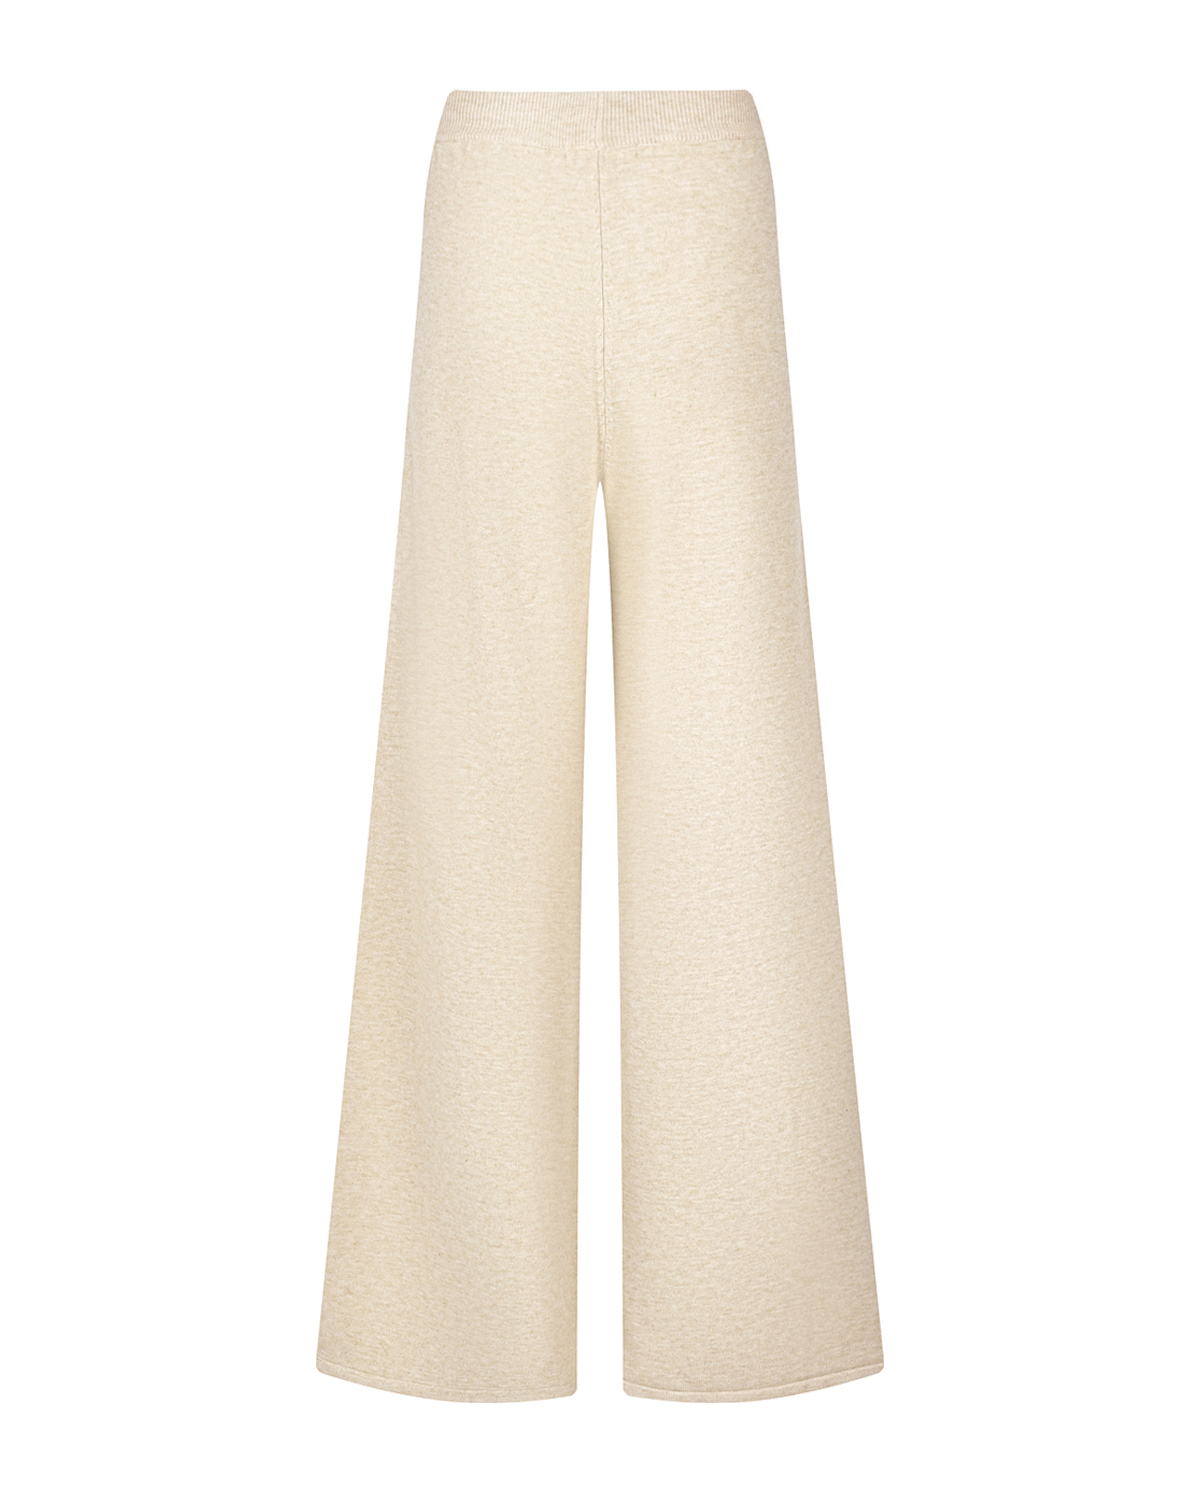 Бежевые брюки палаццо Hinnominate, размер 40, цвет бежевый - фото 2